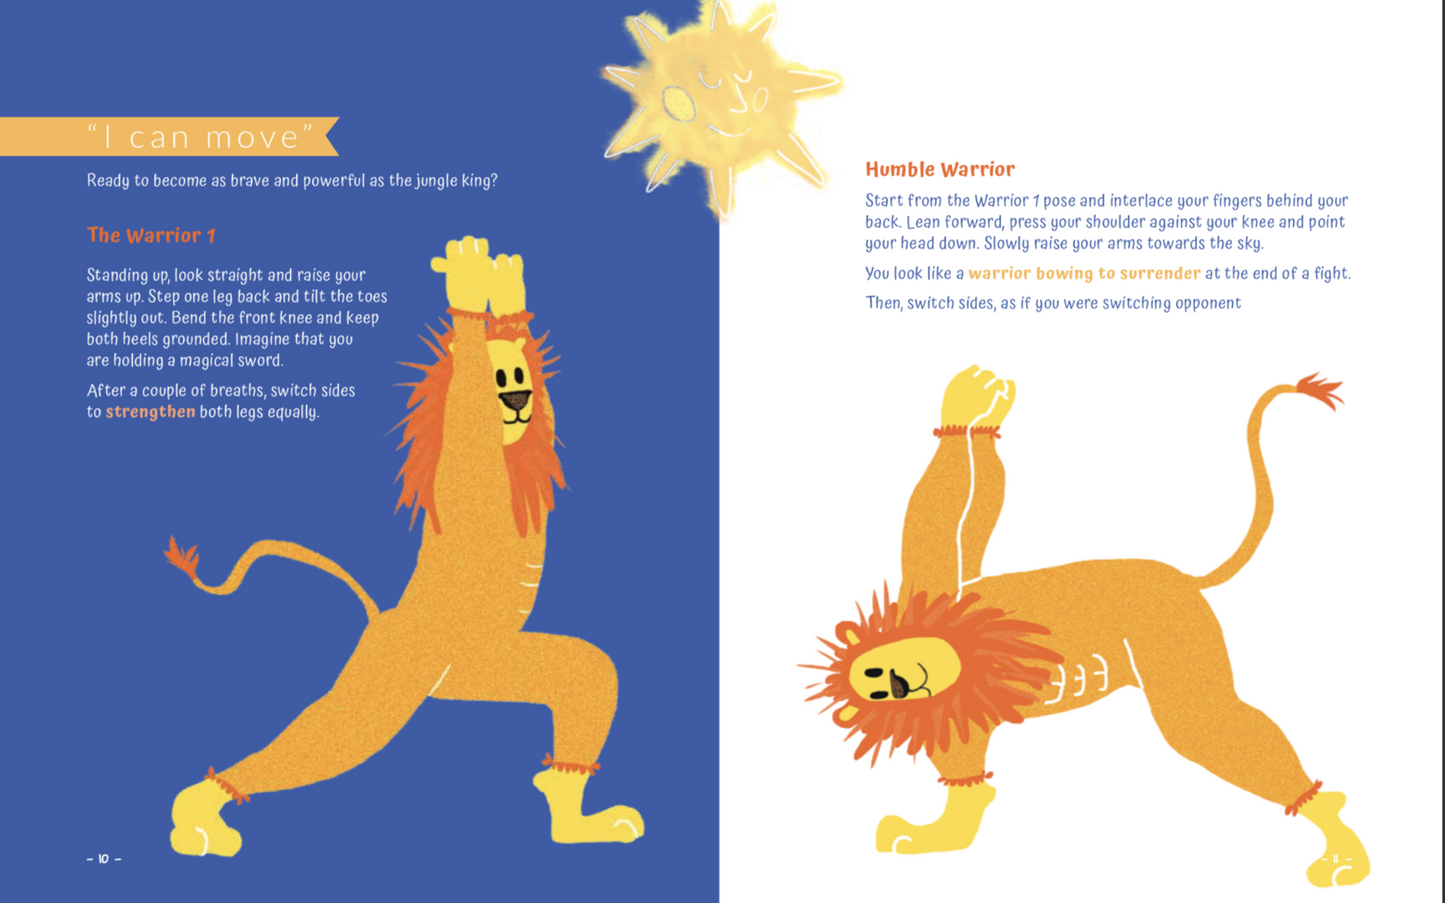 [MiniYOGI] Kids Yoga Book - MiniYOGI Volume 3: The Lion of Strength (Available in Collection of 3 Series)